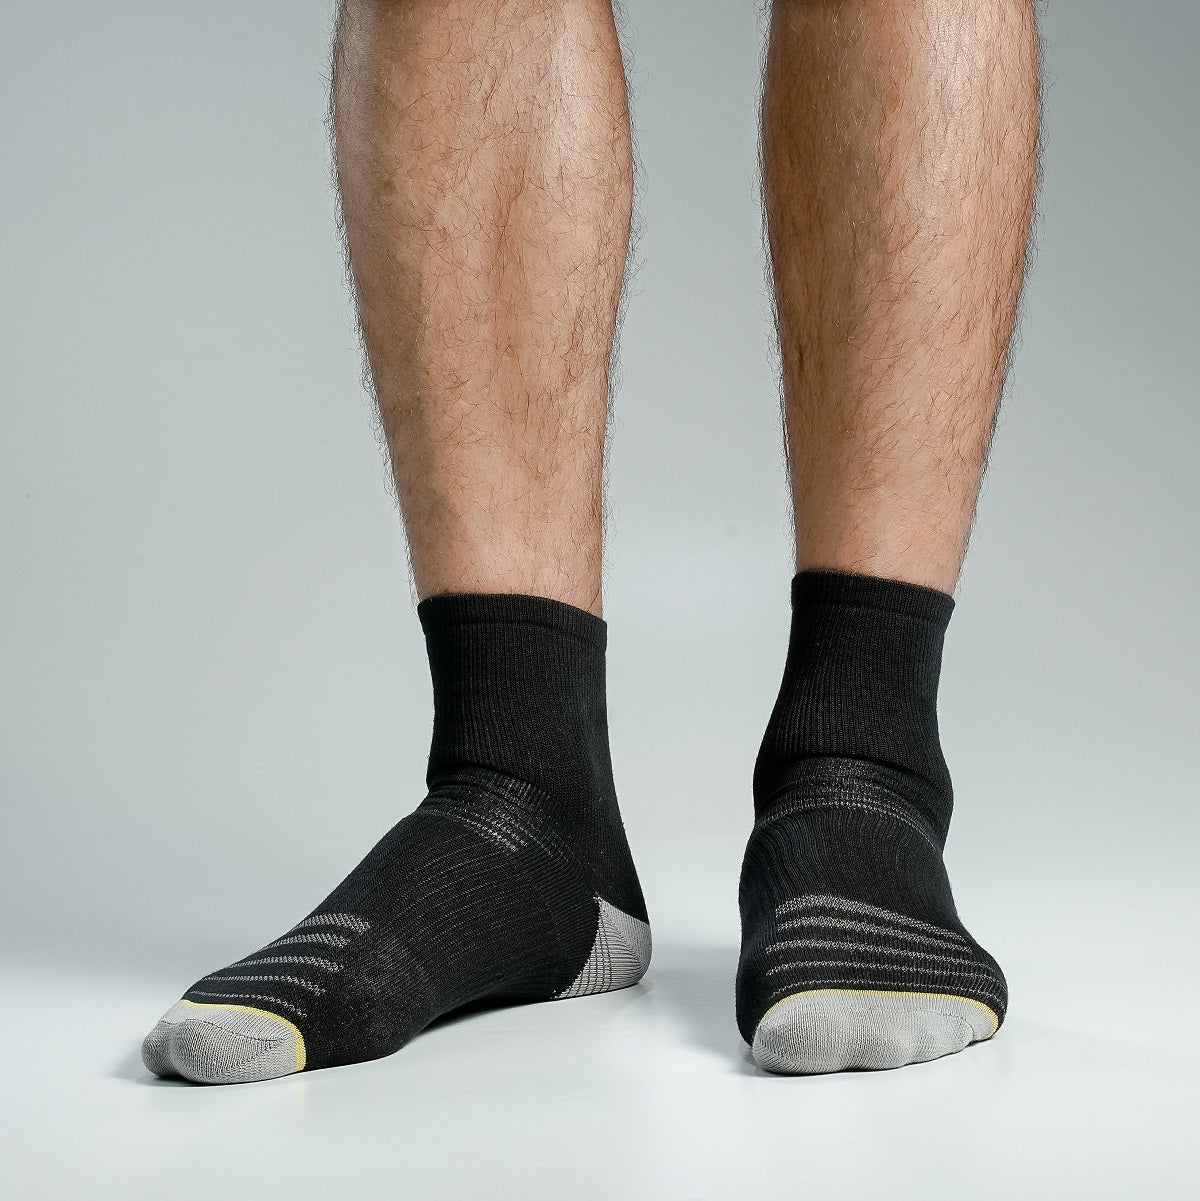 Kmalion Ankle Socks For Men